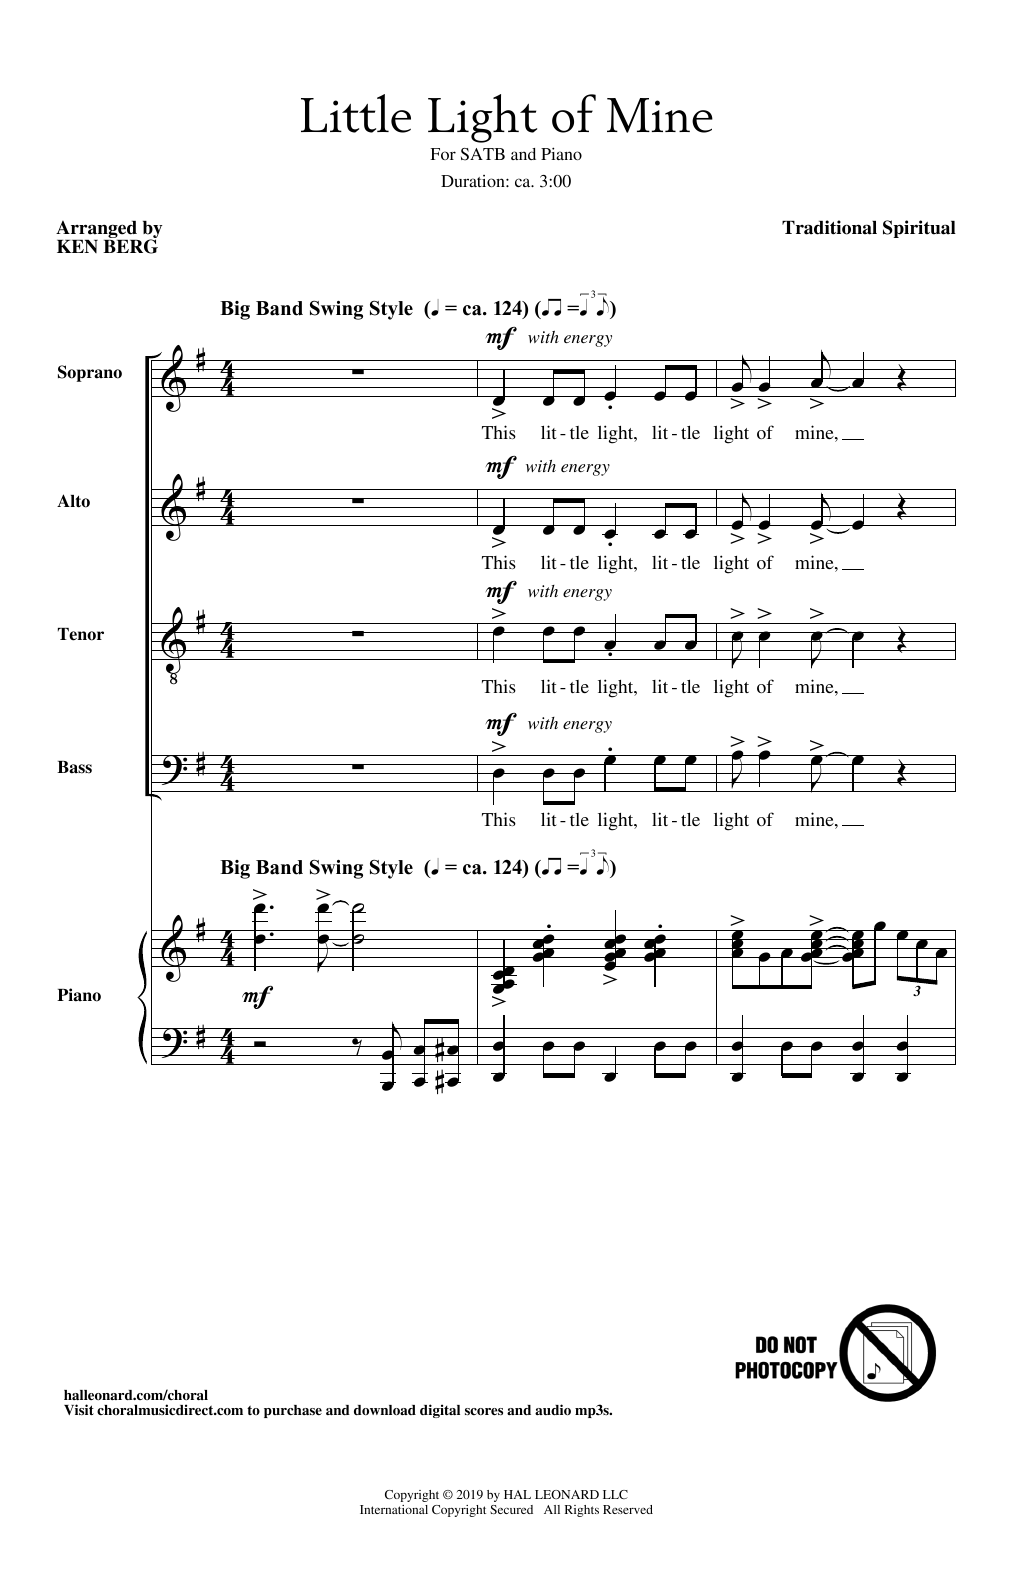 Traditional Spiritual Little Light Of Mine (arr. Ken Berg) sheet music notes and chords arranged for SATB Choir